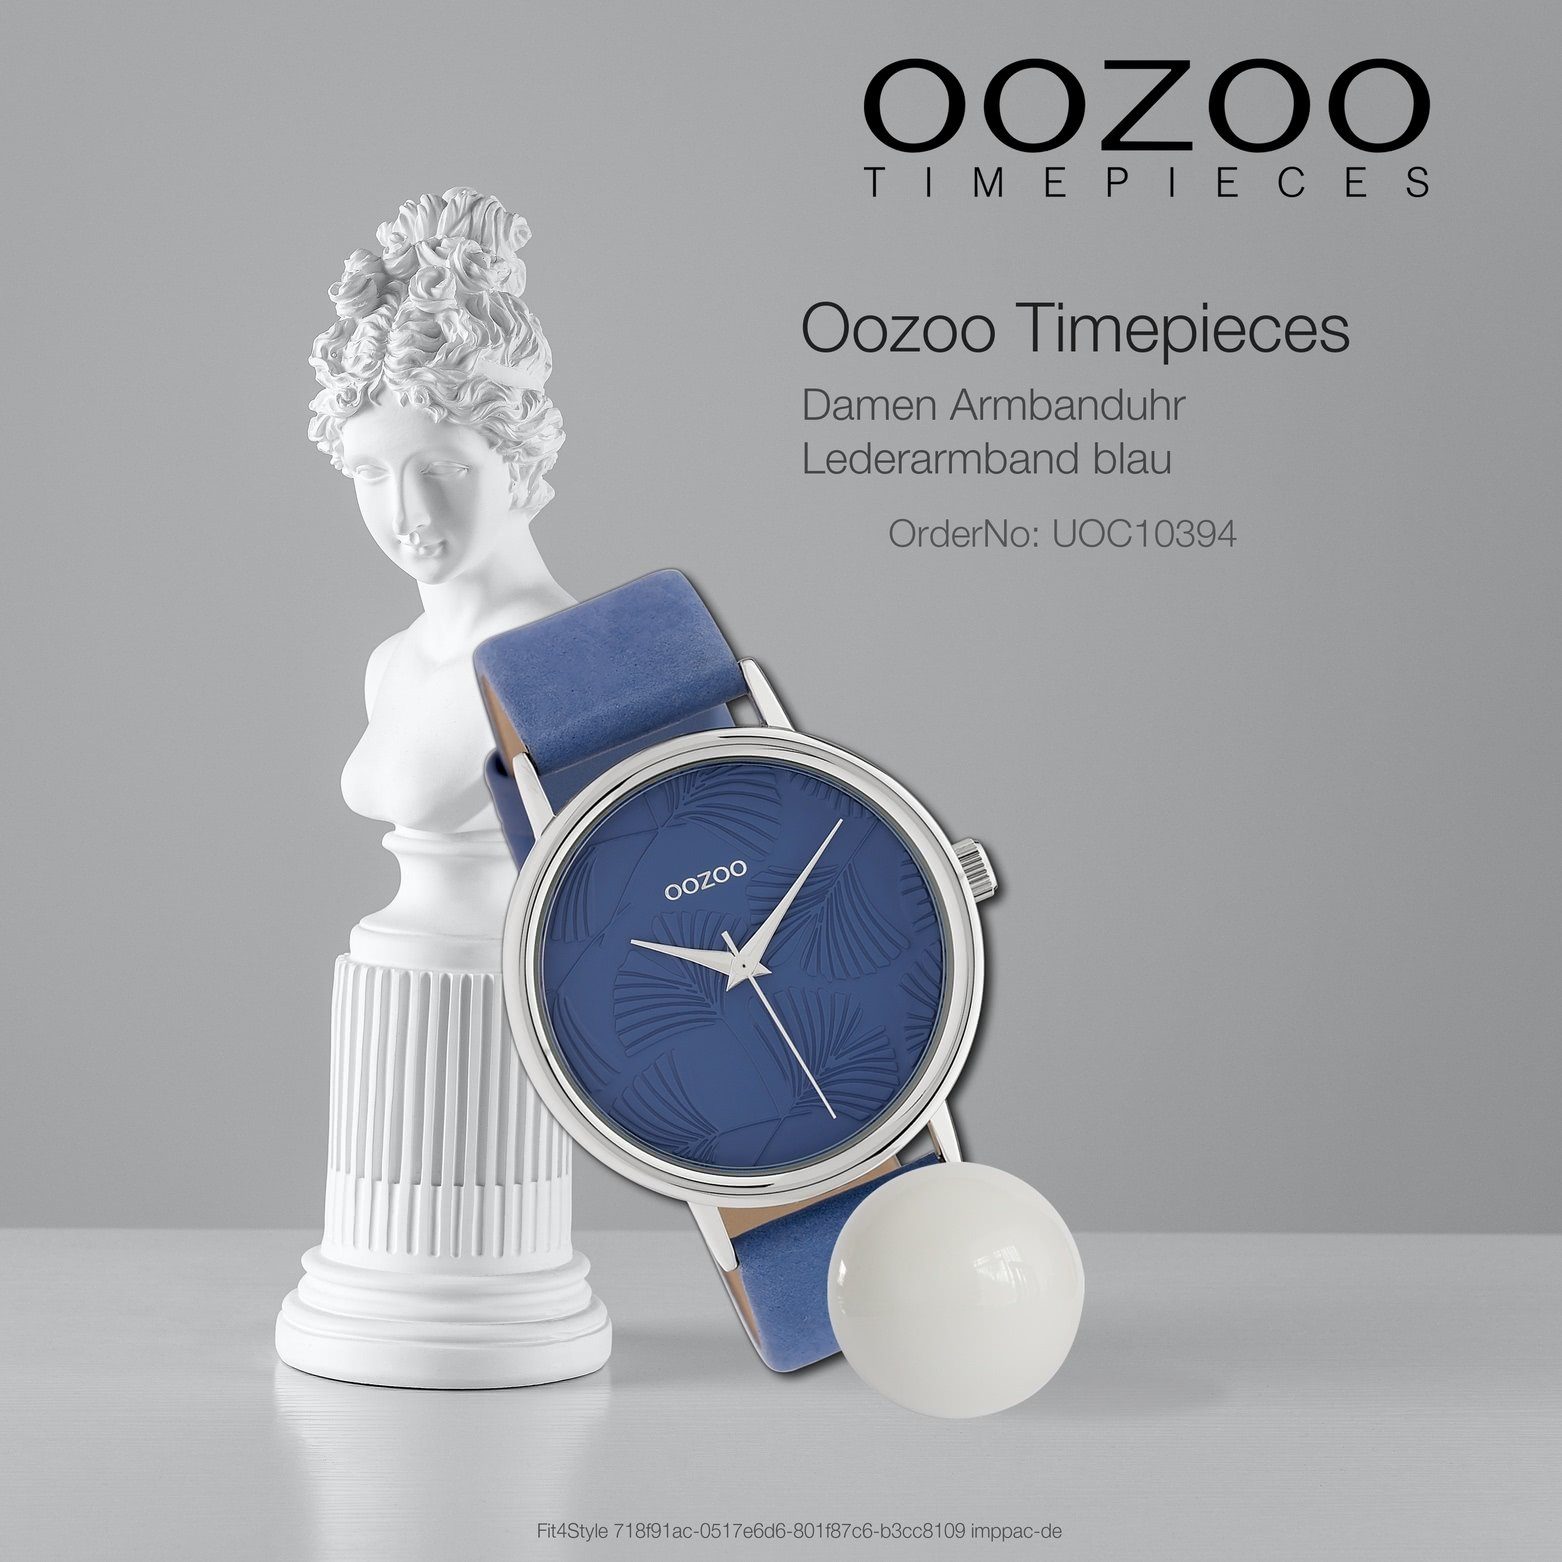 rund, Oozoo 42mm), Fashion OOZOO Quarzuhr Lederarmband Armbanduhr Damenuhr (ca. OOZOO Damen Timepieces, groß blau,